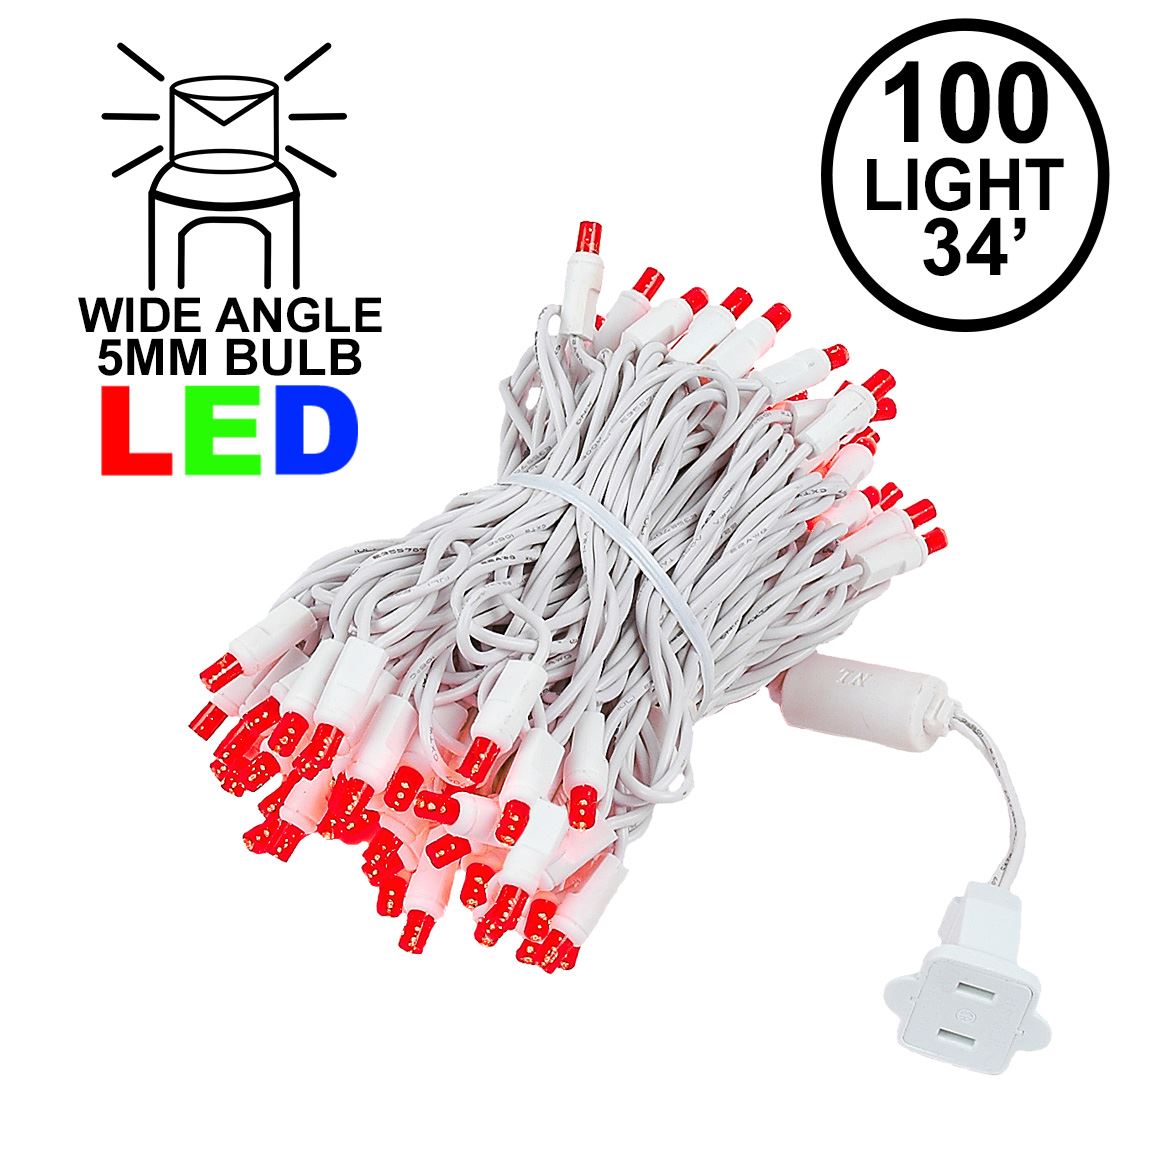 Red 100 Bulb Led Lights, Wide Angle 5mm Led Lights